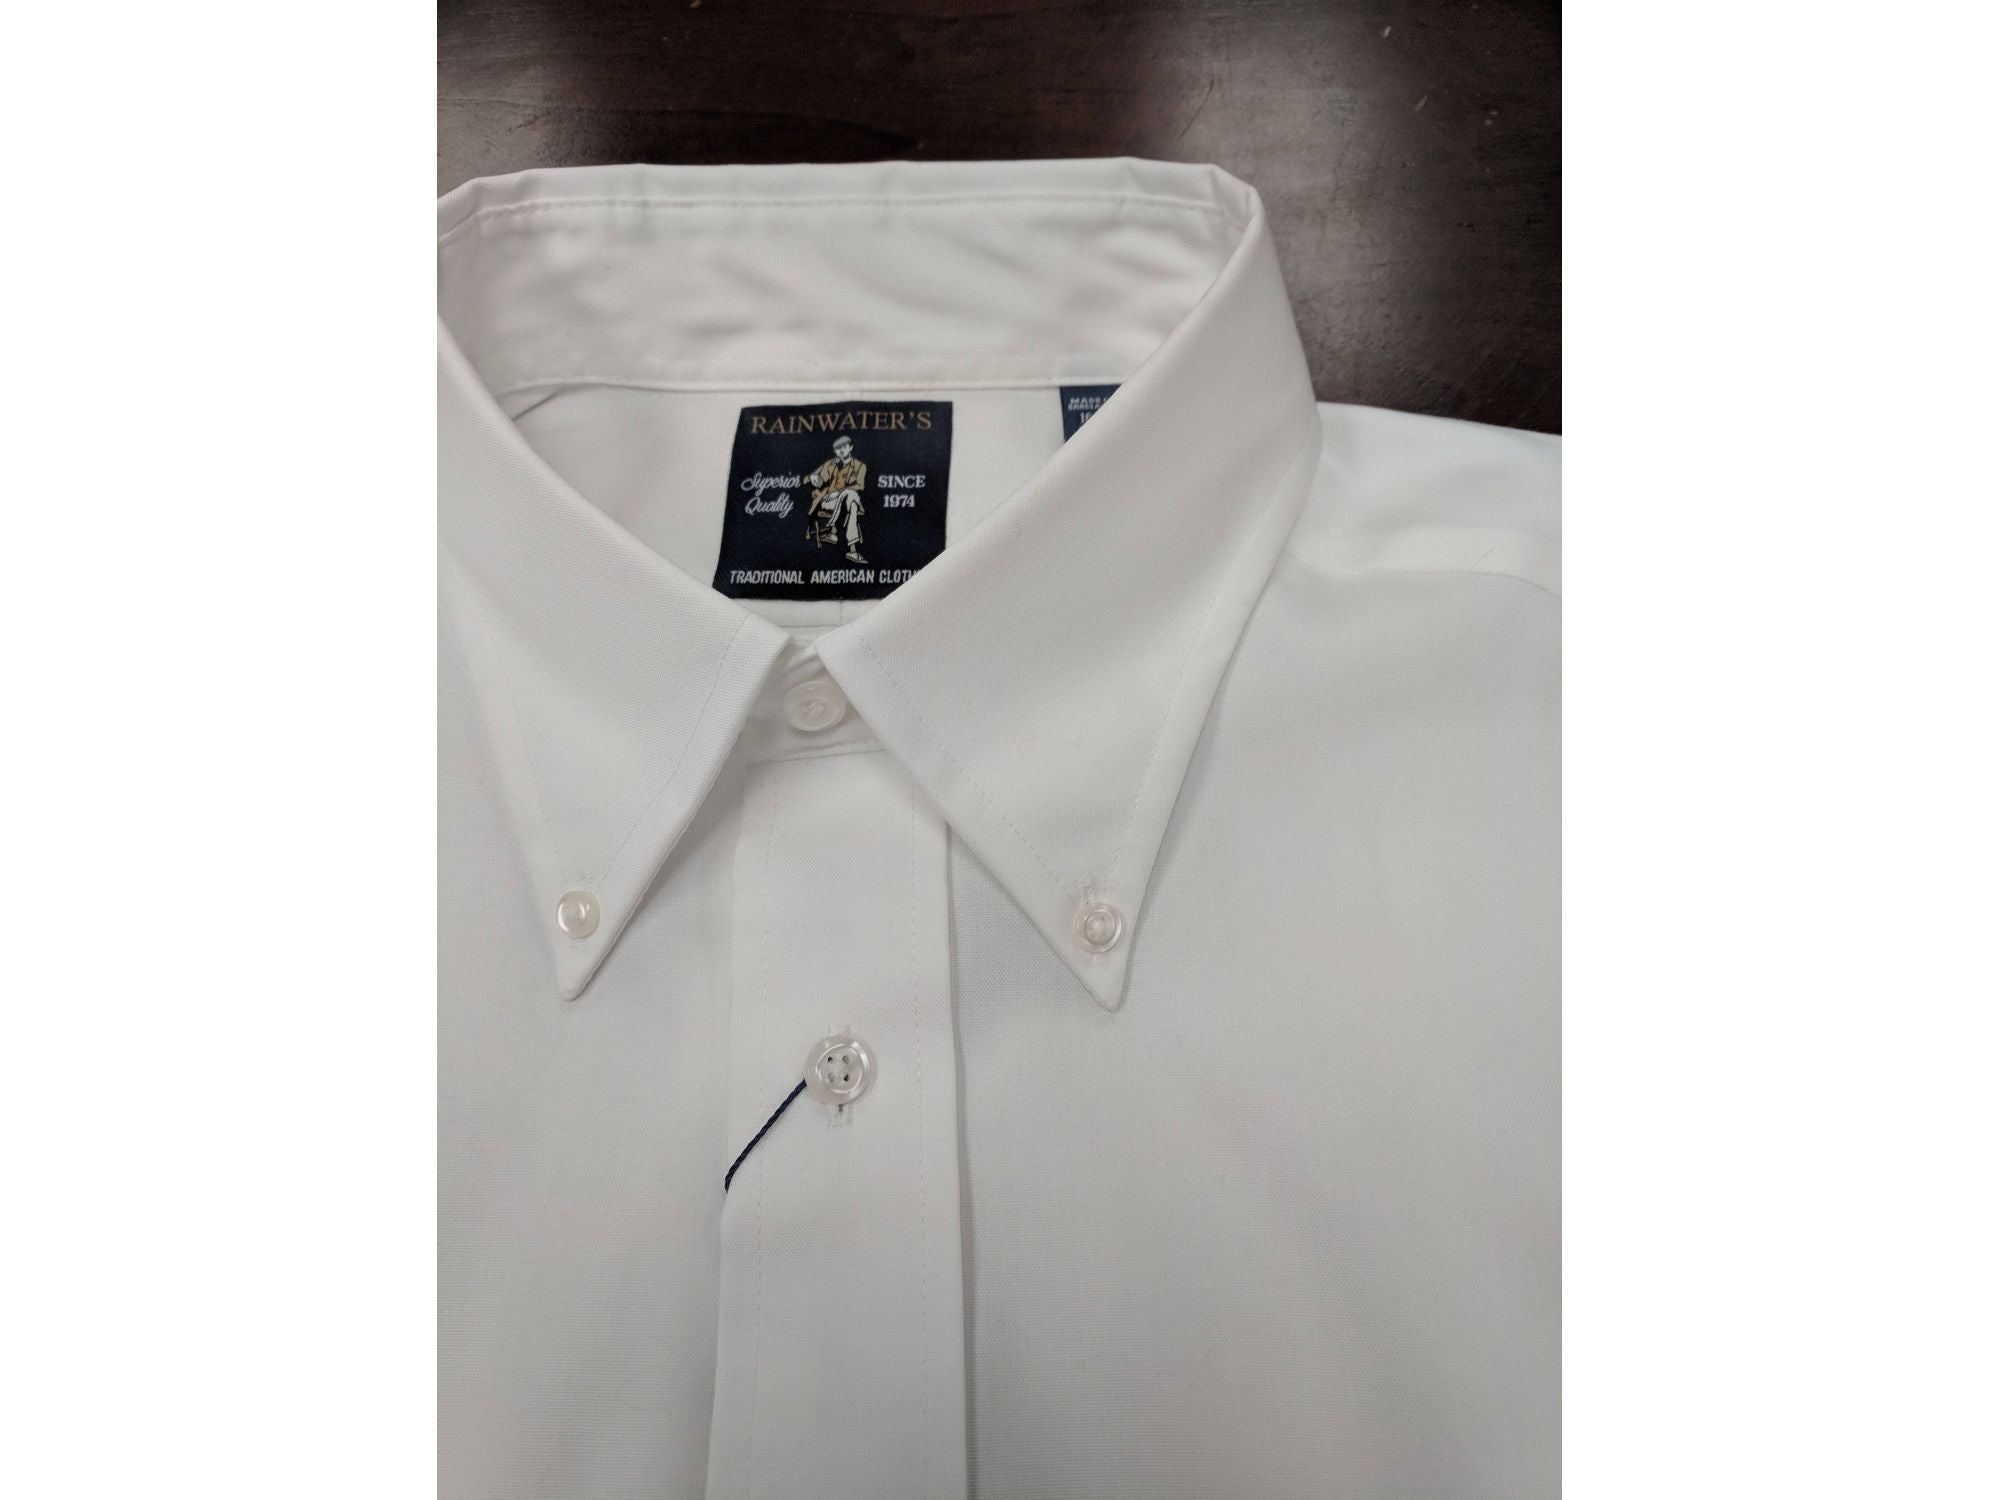 Rainwater's White Pinpoint Button-Down Dress Shirt - Rainwater's Men's Clothing and Tuxedo Rental